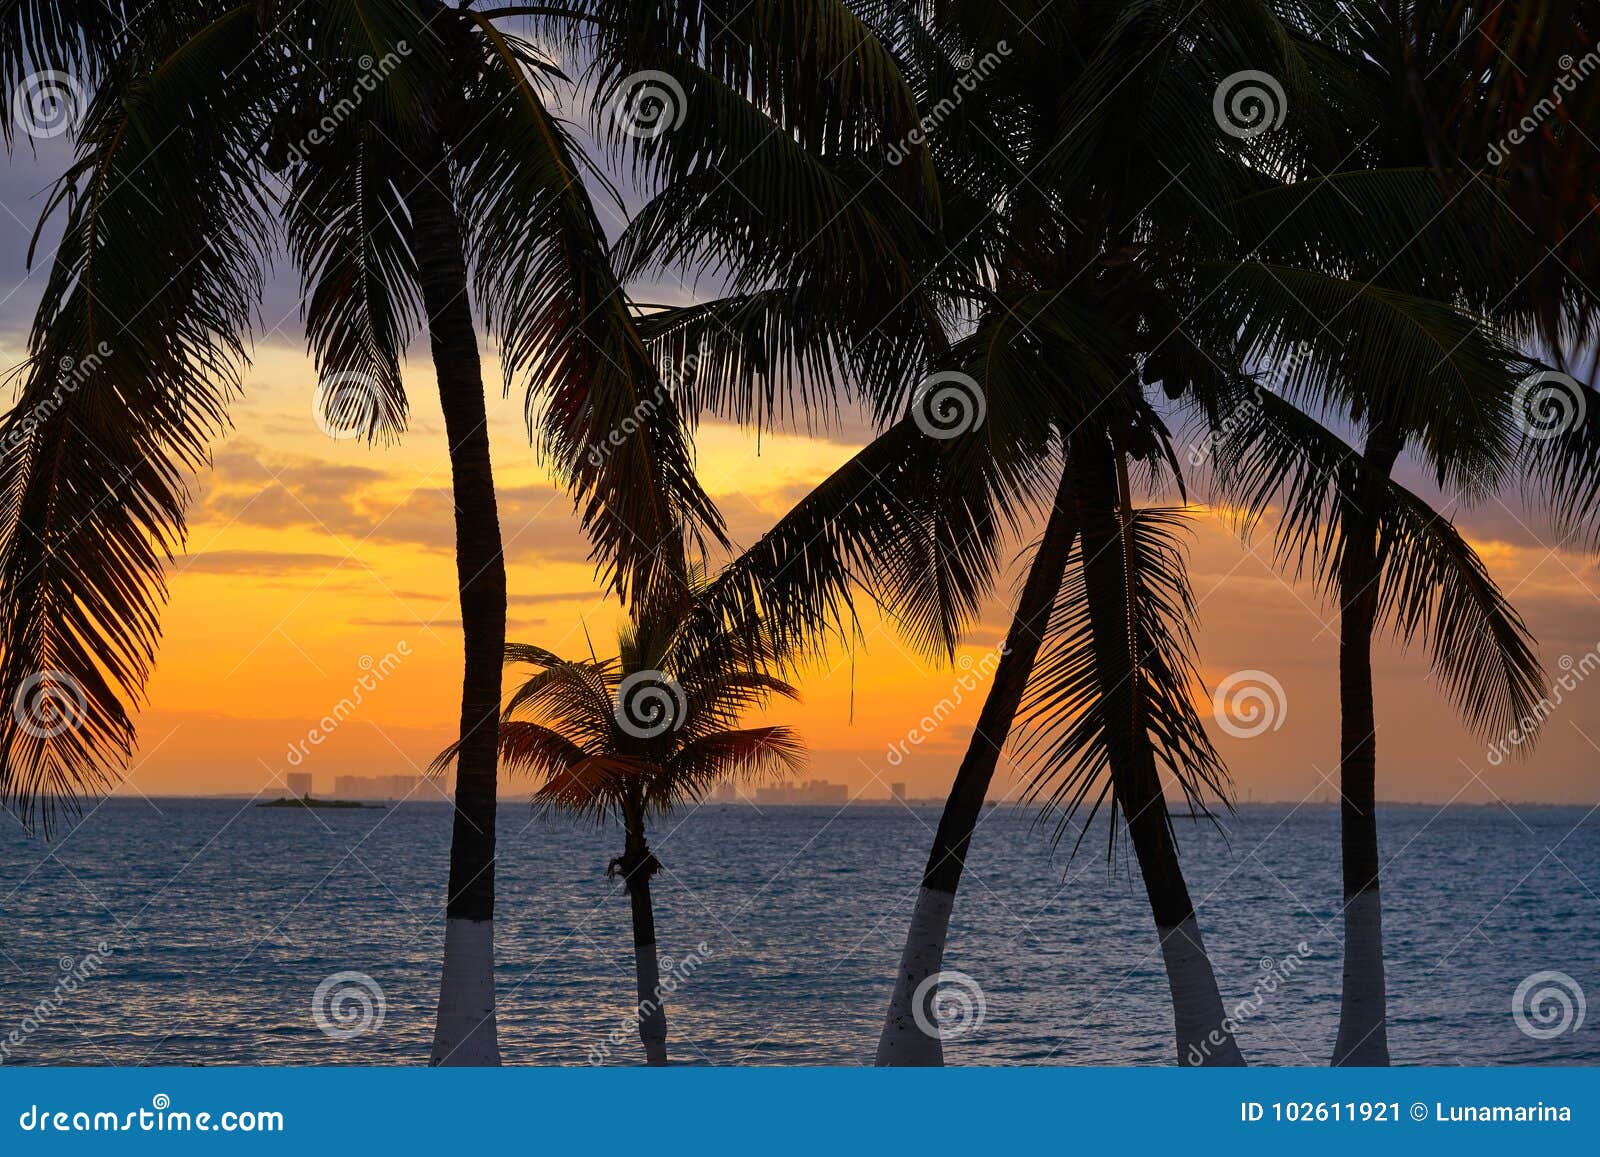 isla mujeres island caribbean beach sunset